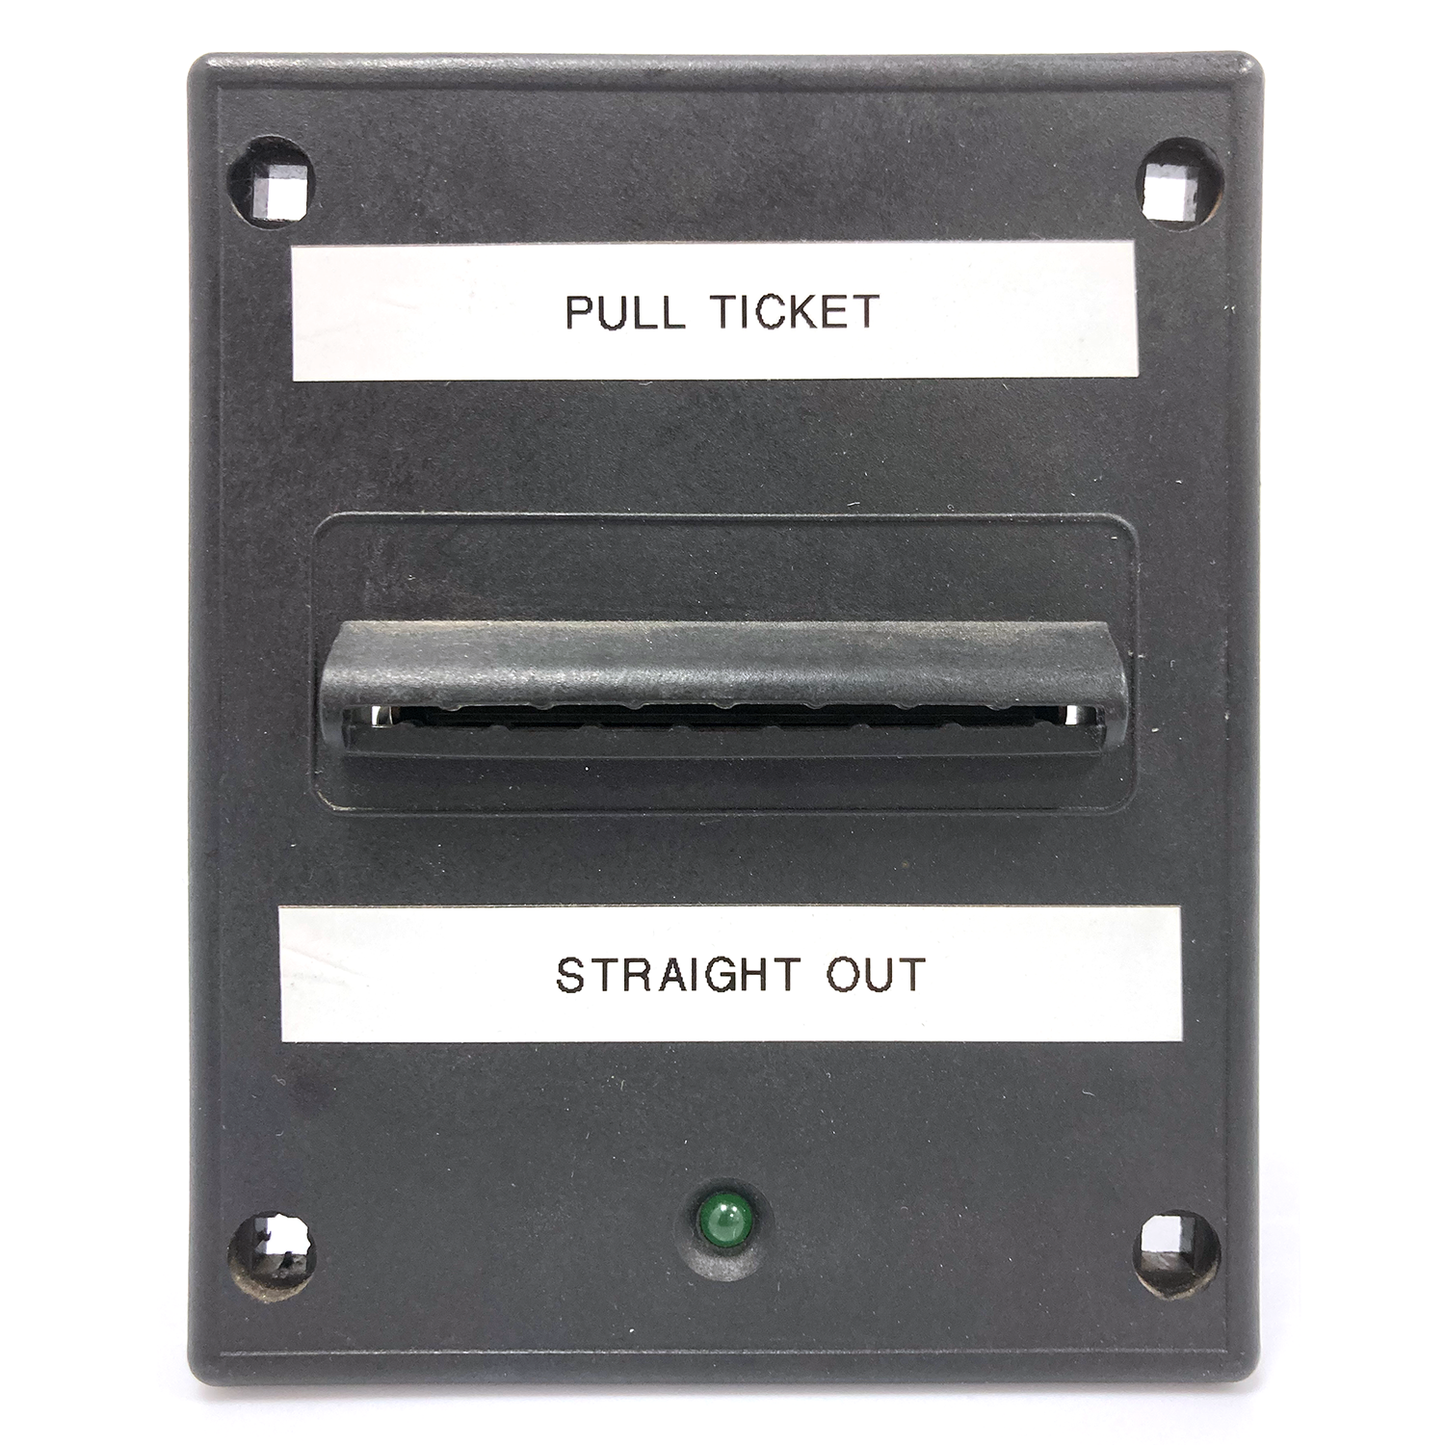 The used Custom TGO2h Printer is a pull-to-tear ticket printer that utilized custom POS emulation.